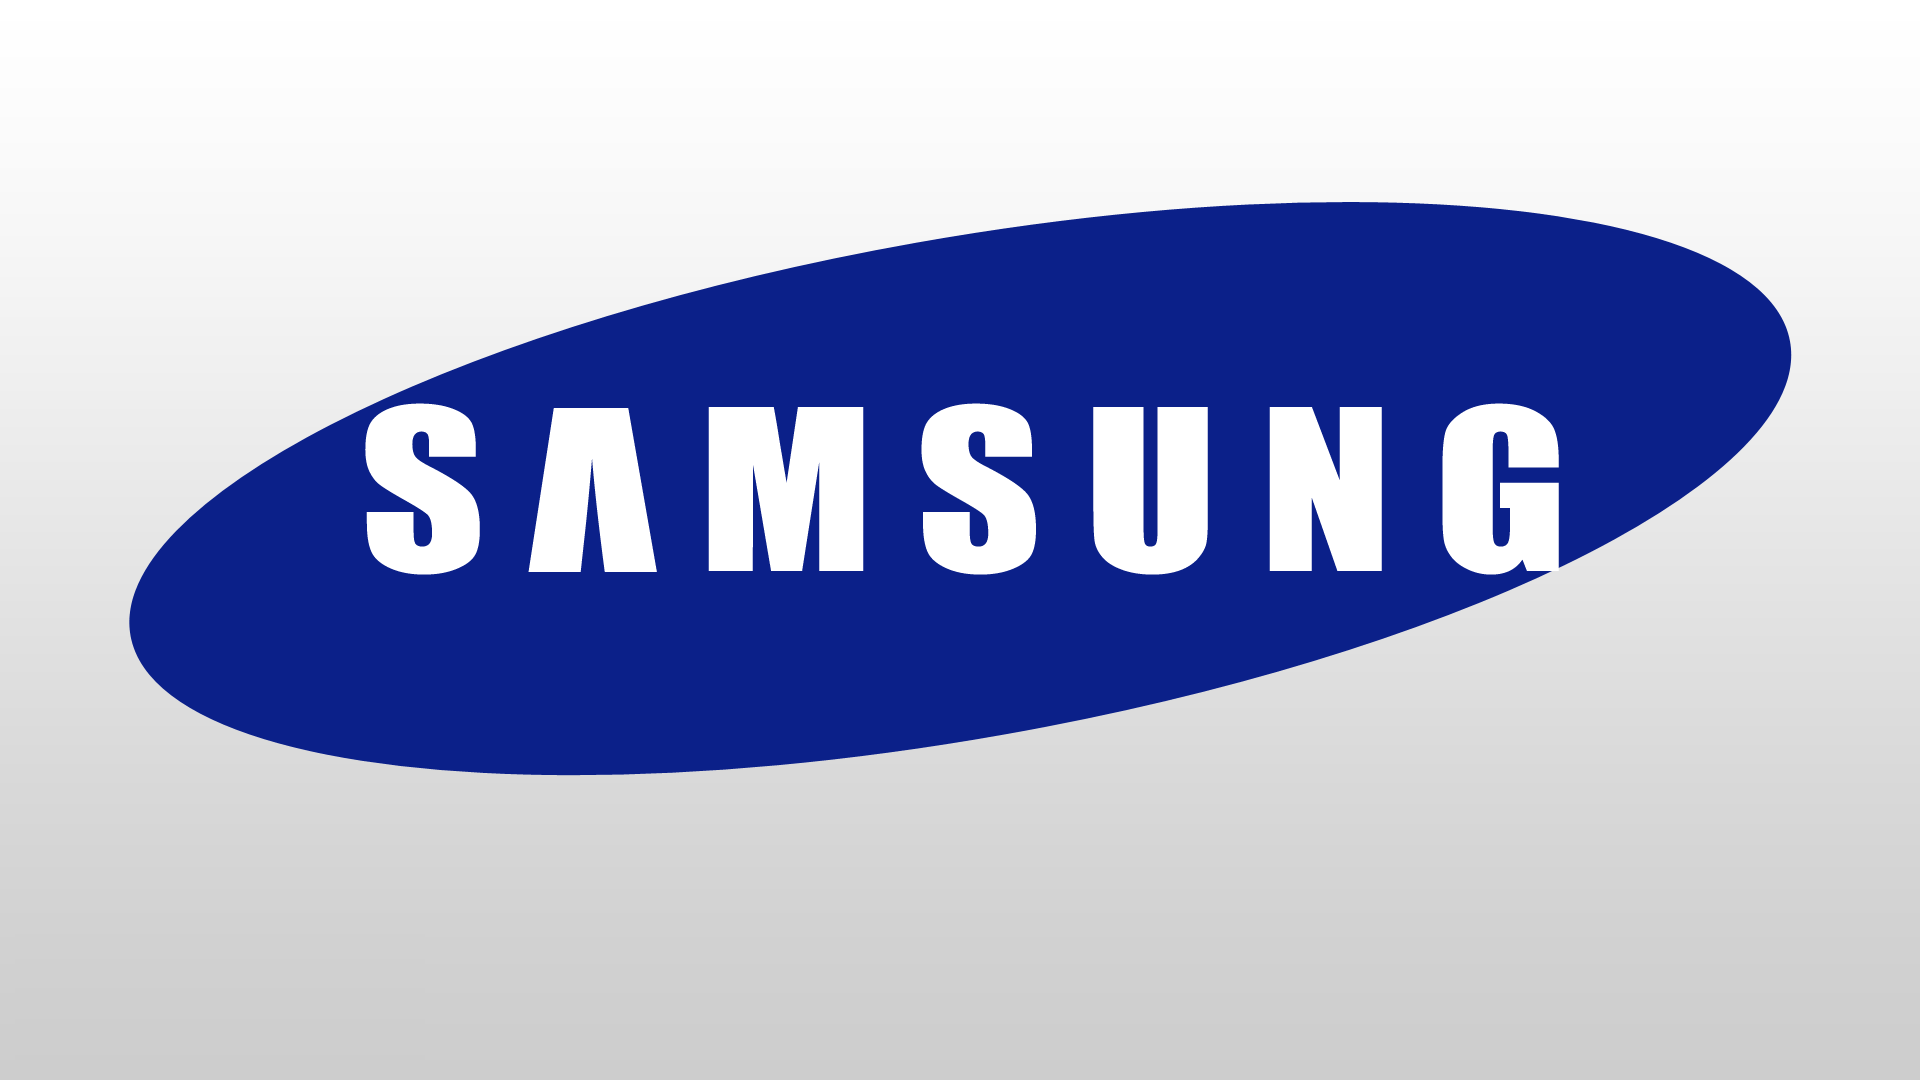 SamsungTelevisions Logo - Samsung LED TV Logo Wallpapers - Wallpaper Cave